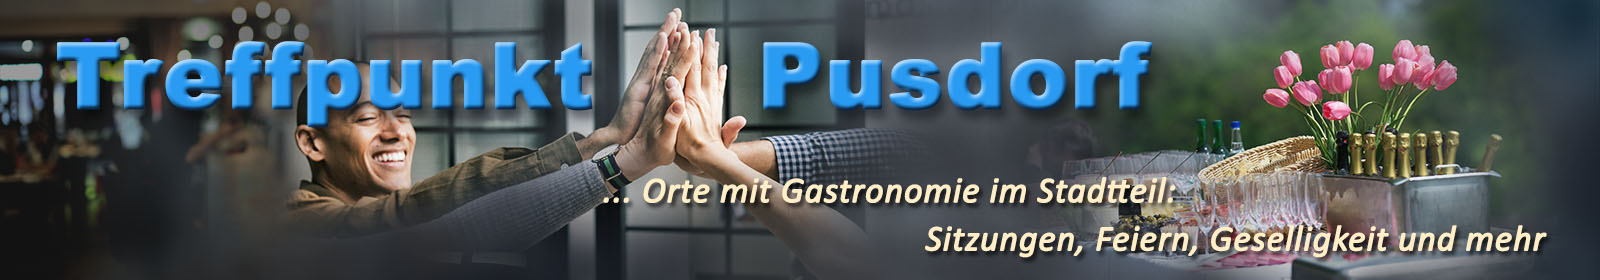 pusdorf.info – Zum Pusdorper Leuchtturm